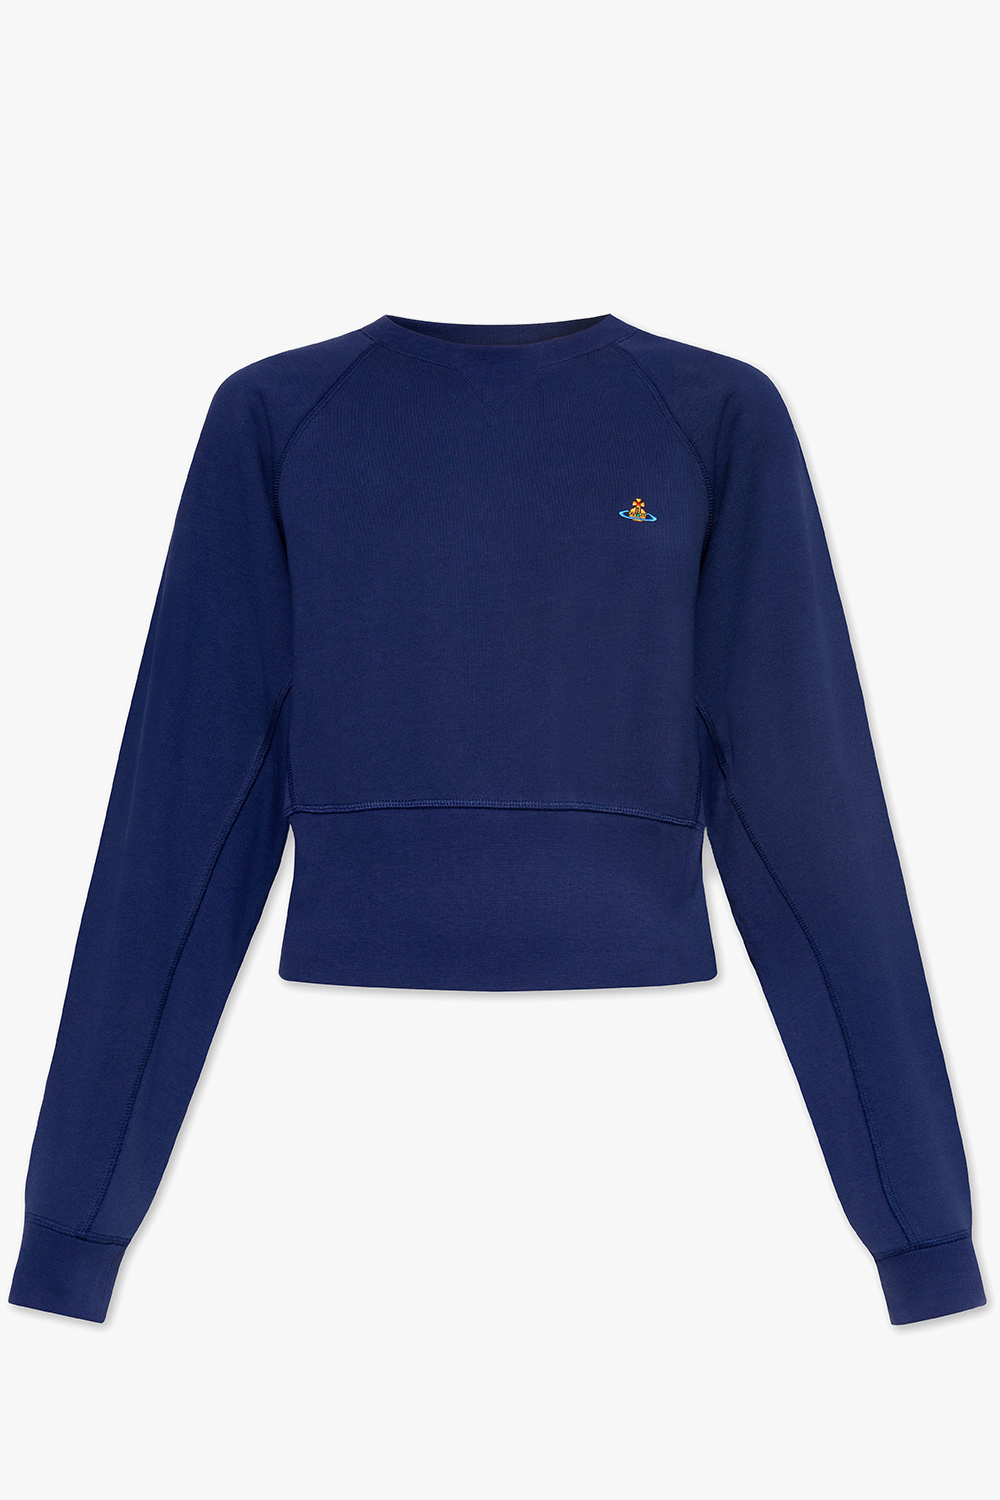 Vivienne Westwood polo ralph lauren crp hd long sleeve sweatshirt